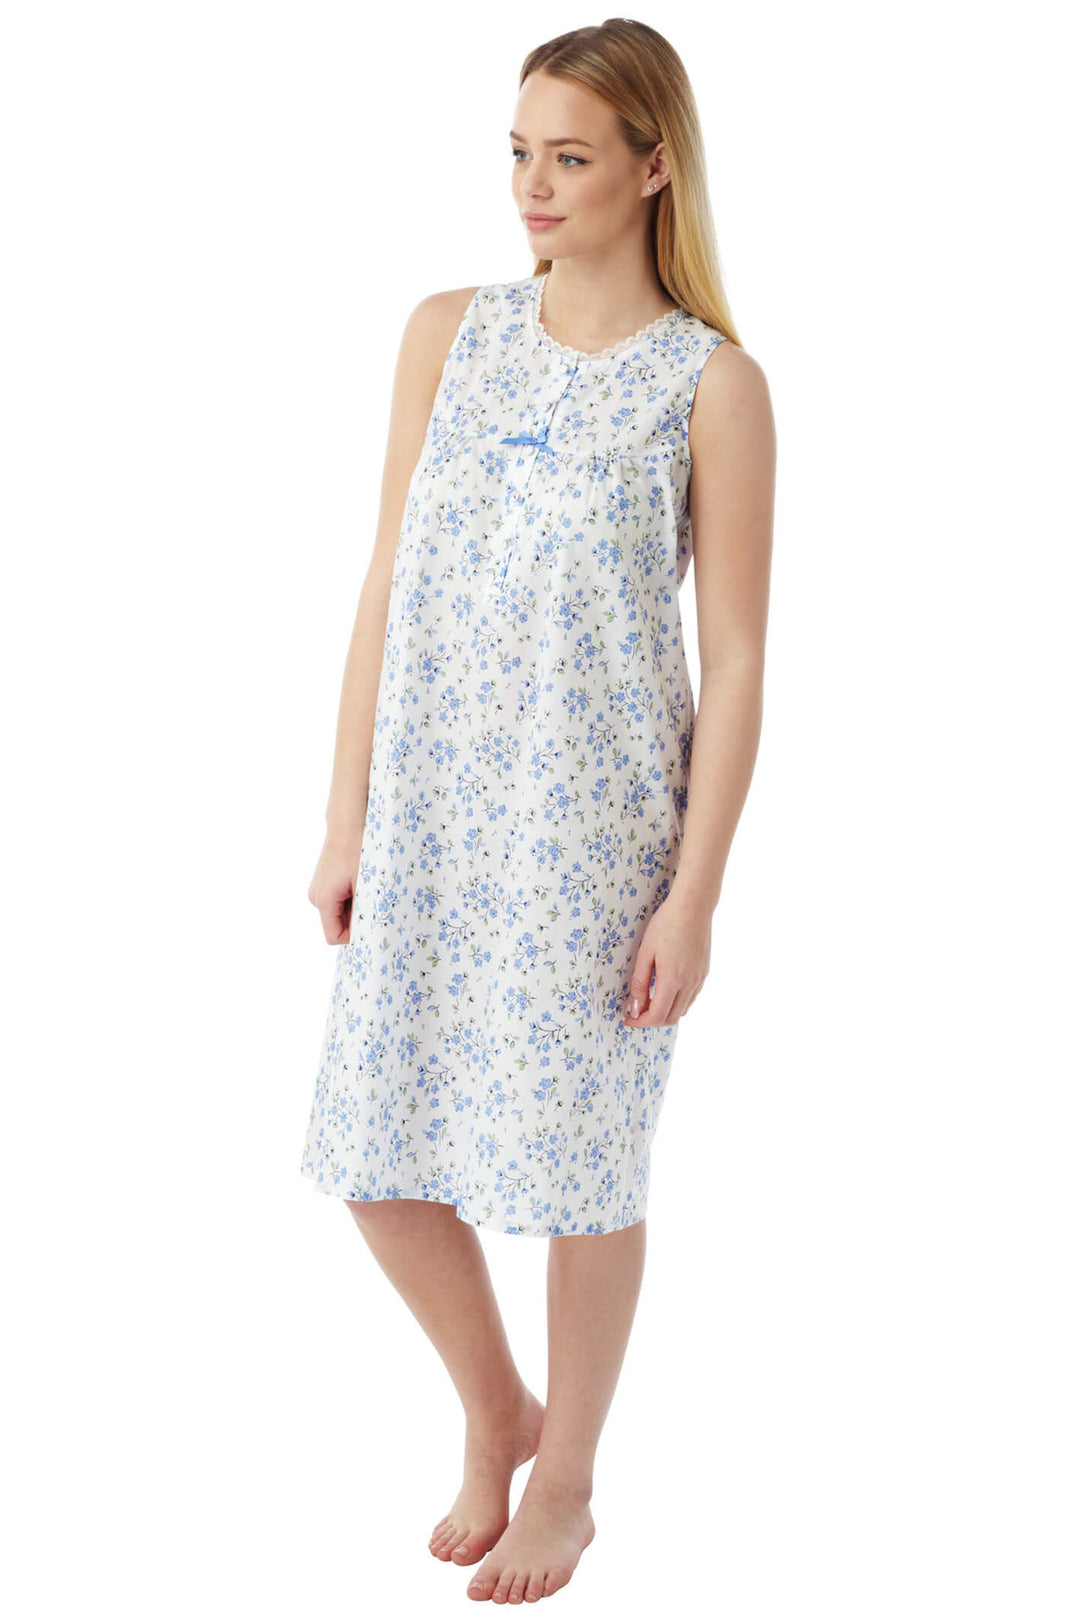 Marlon MN16 Blue Floral Sleeveless Nightdress - Shirley Allum Boutique